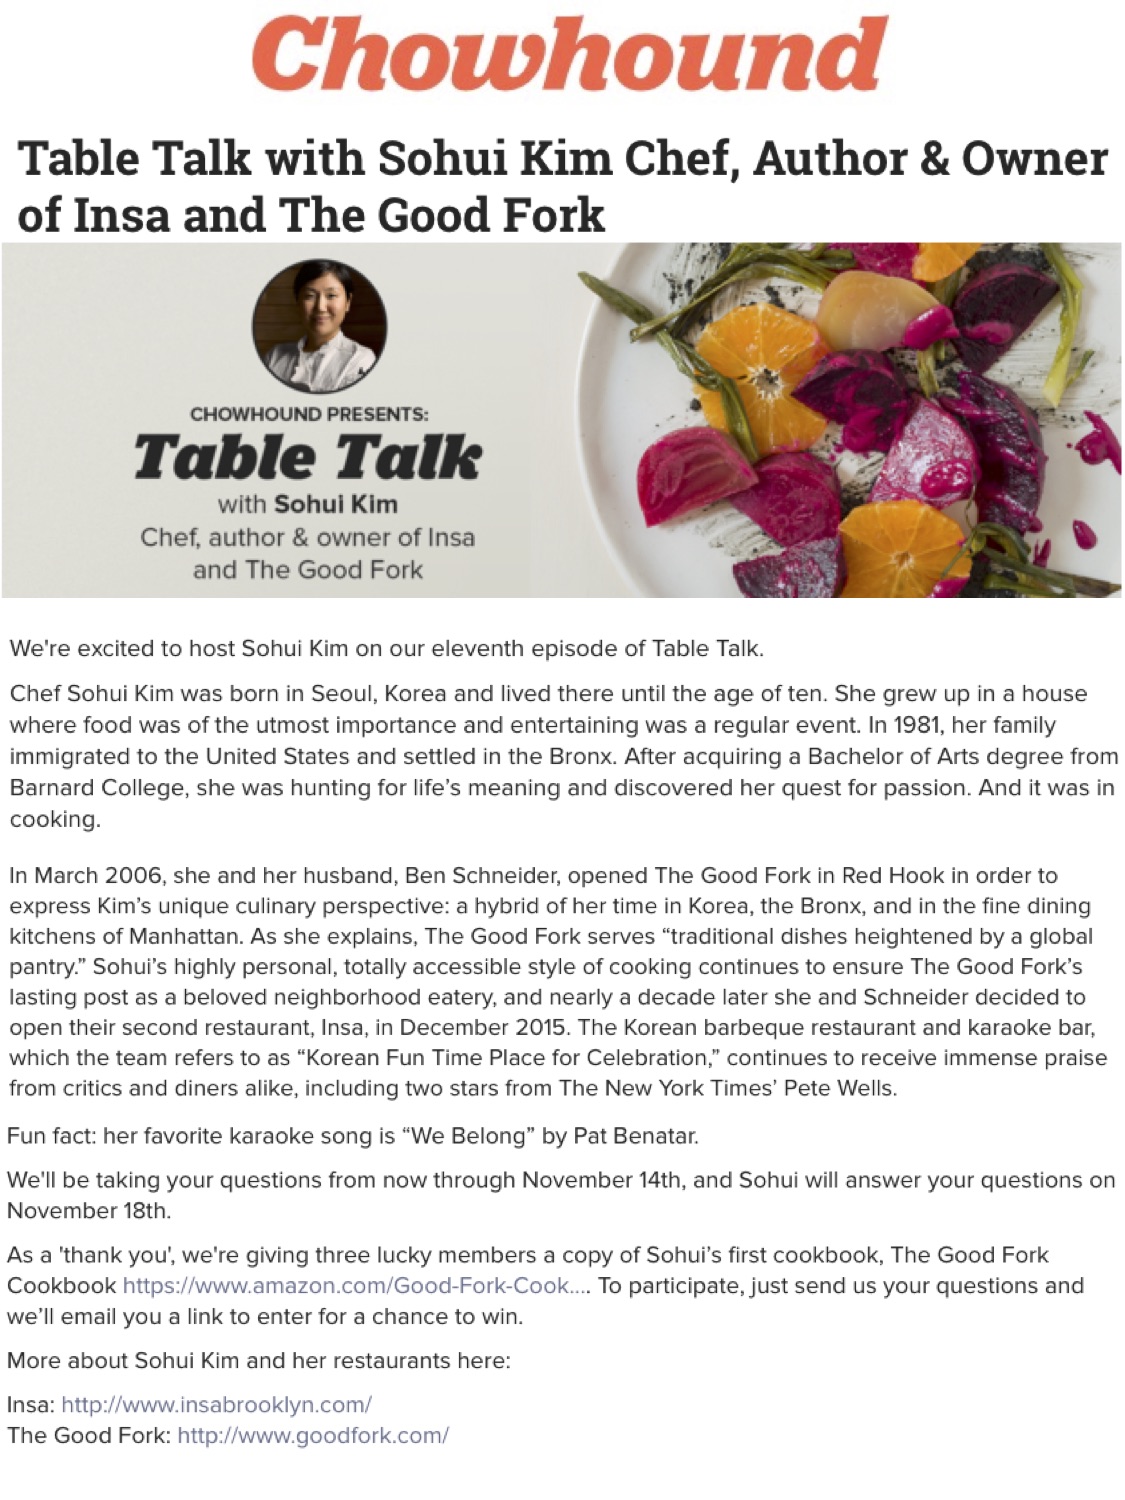 Chowhound Table Talk, 11.18.16.jpg